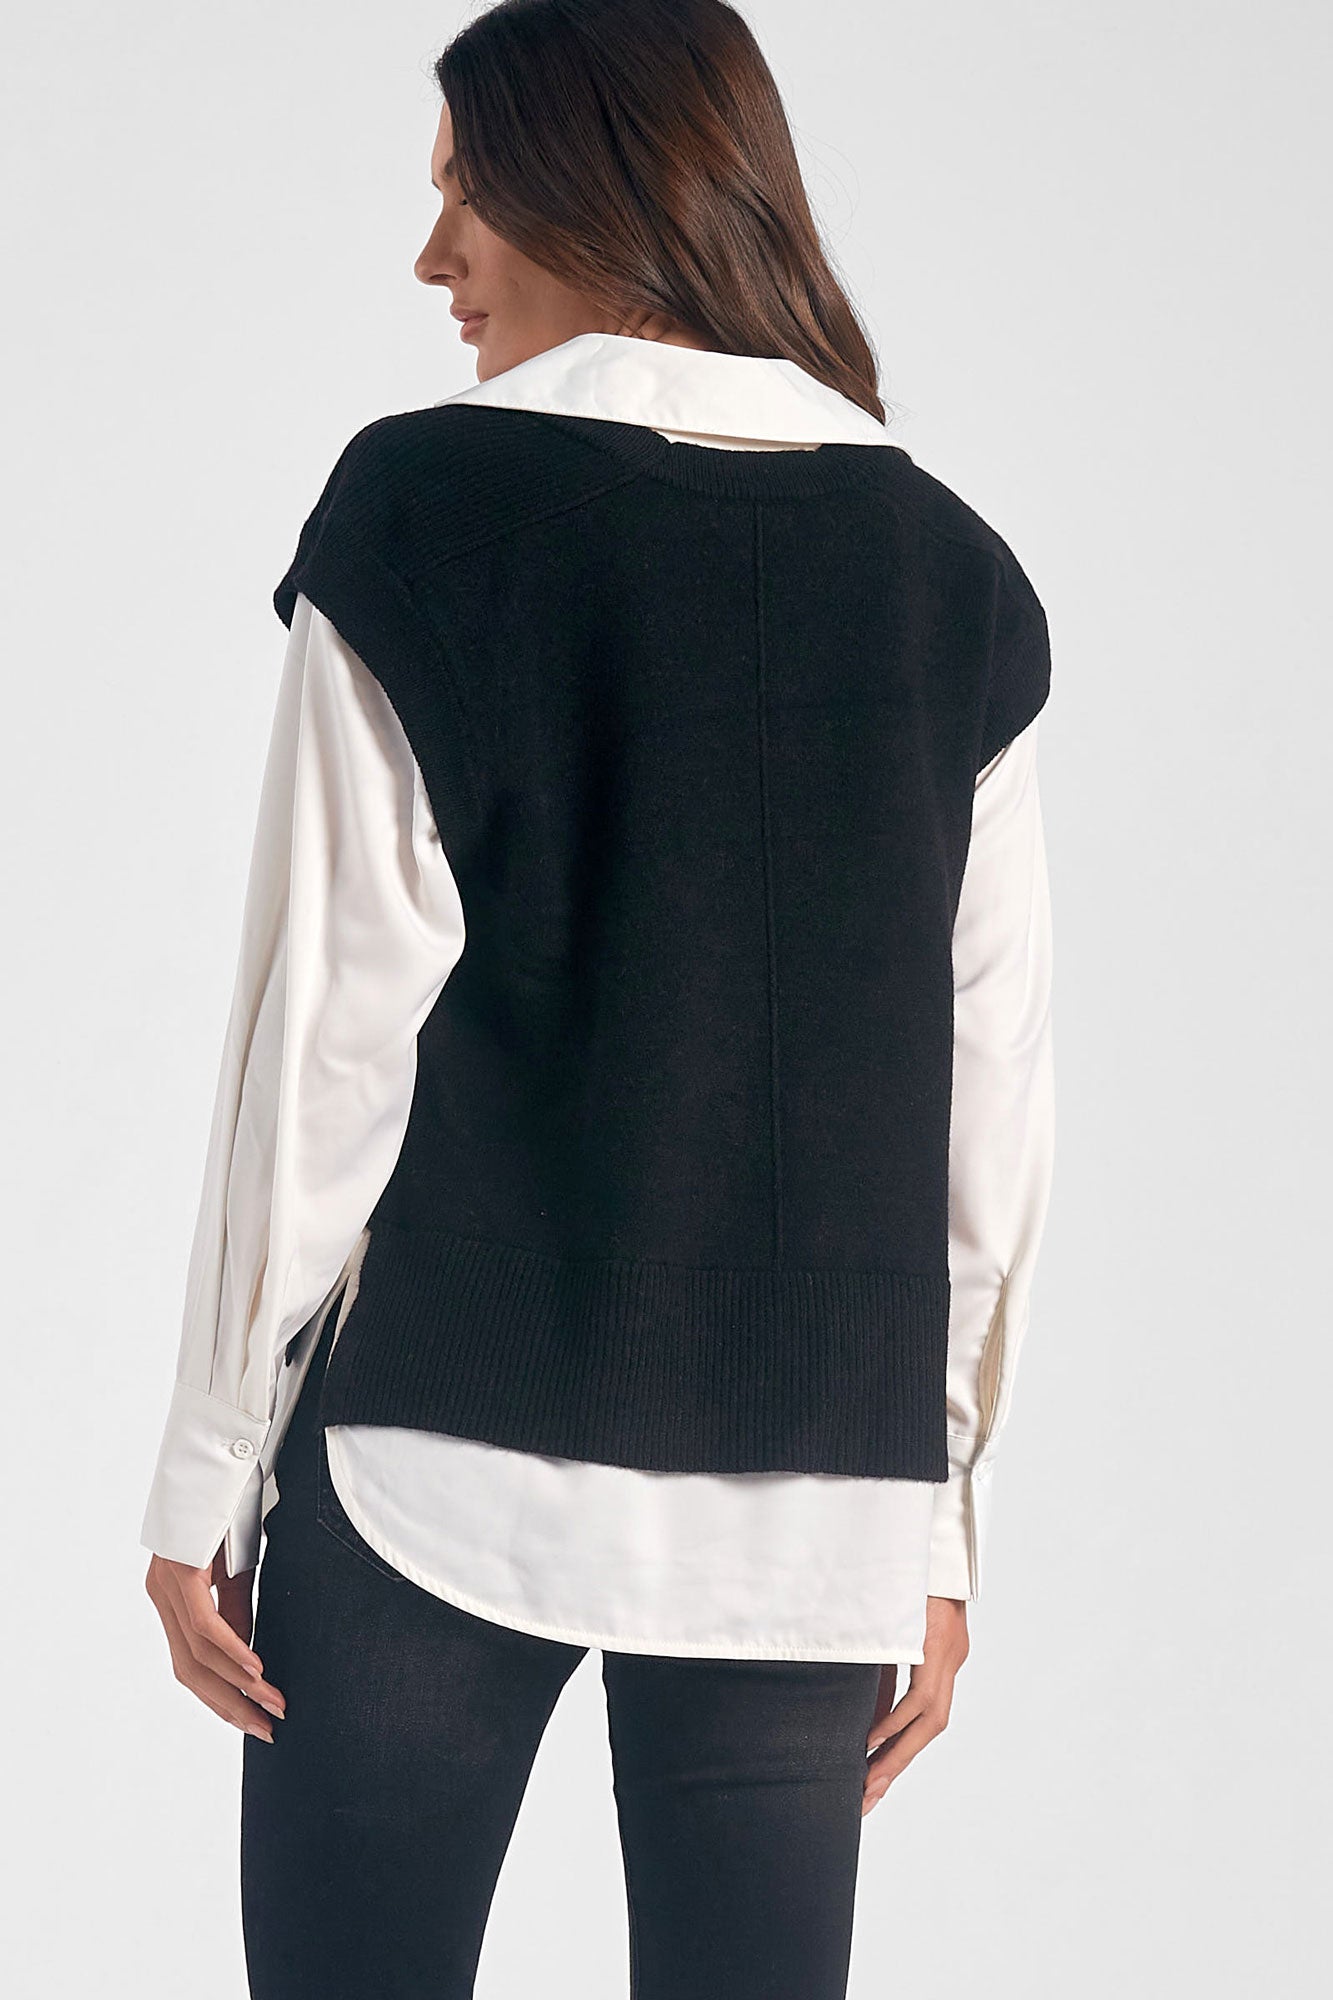 Sweater/Shirt Combo